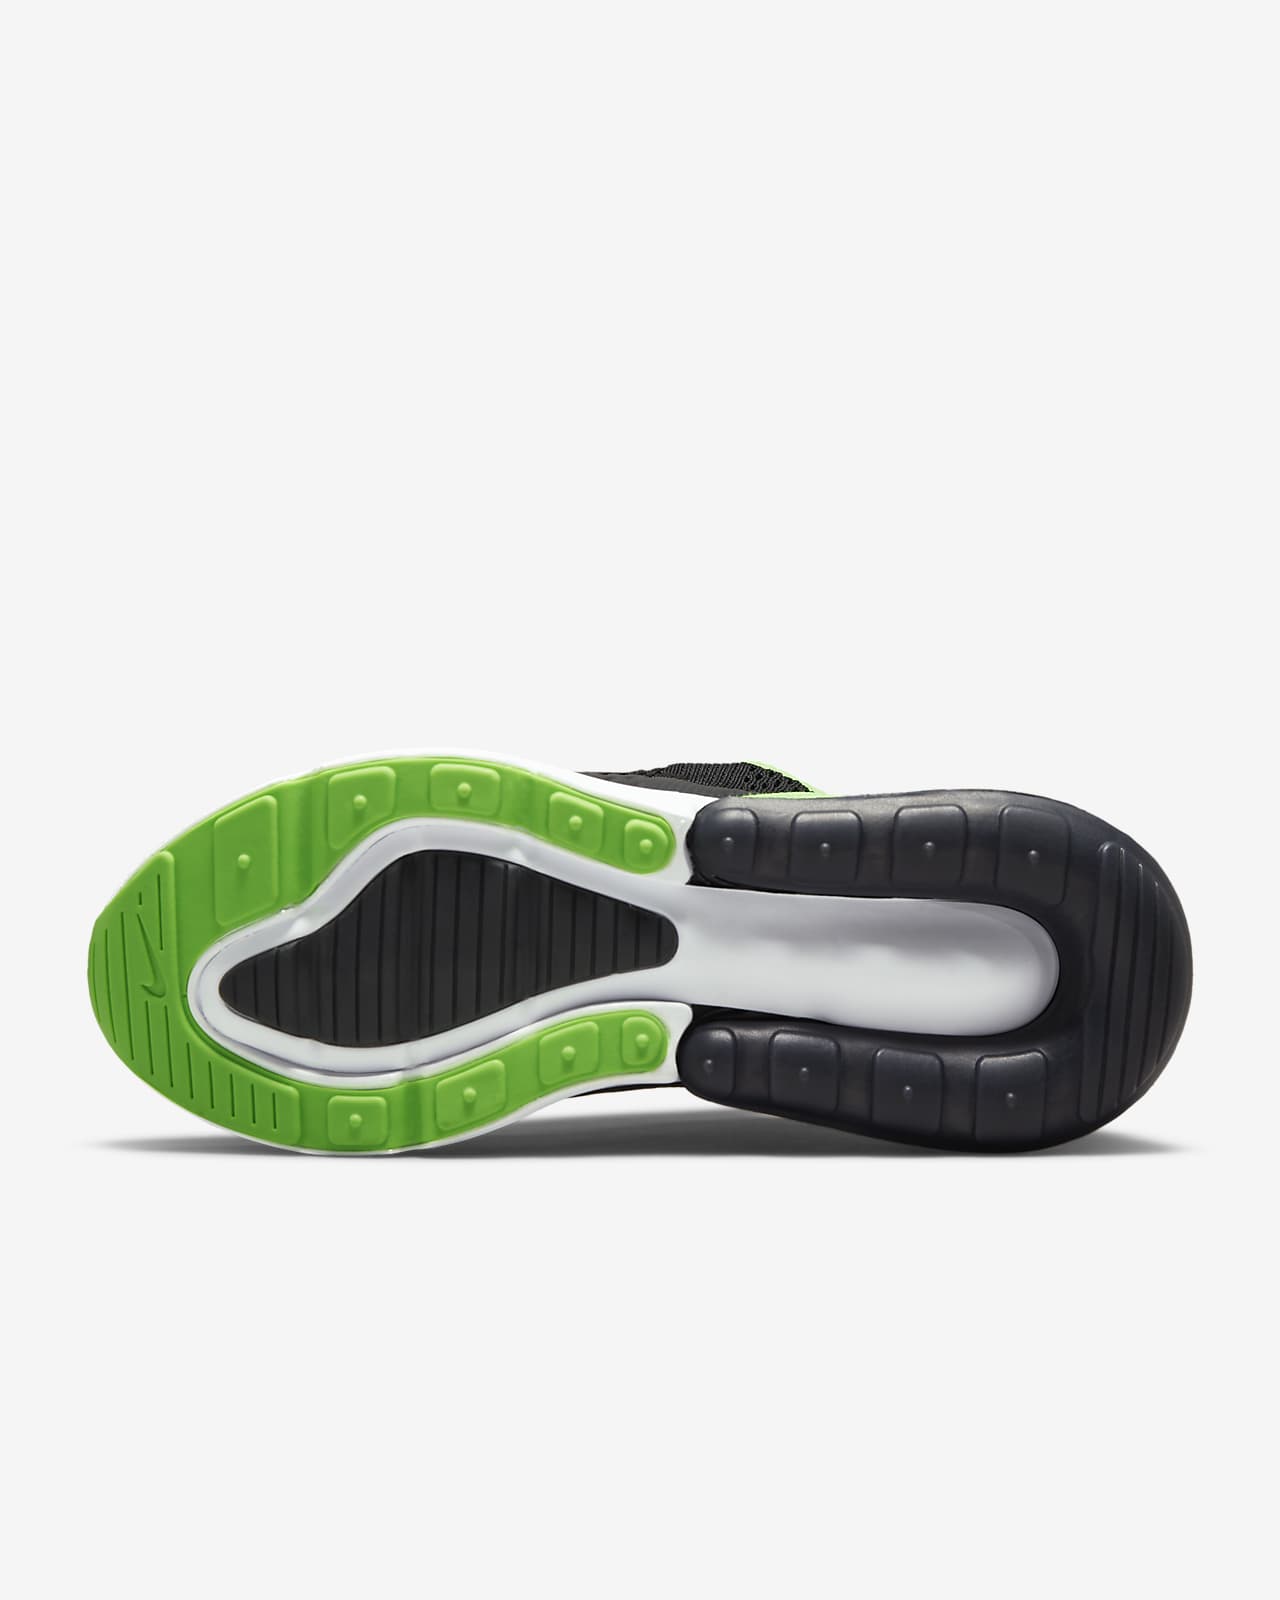 Calzado para niños grandes Nike Air Max 270 سعر اختبار ستيب